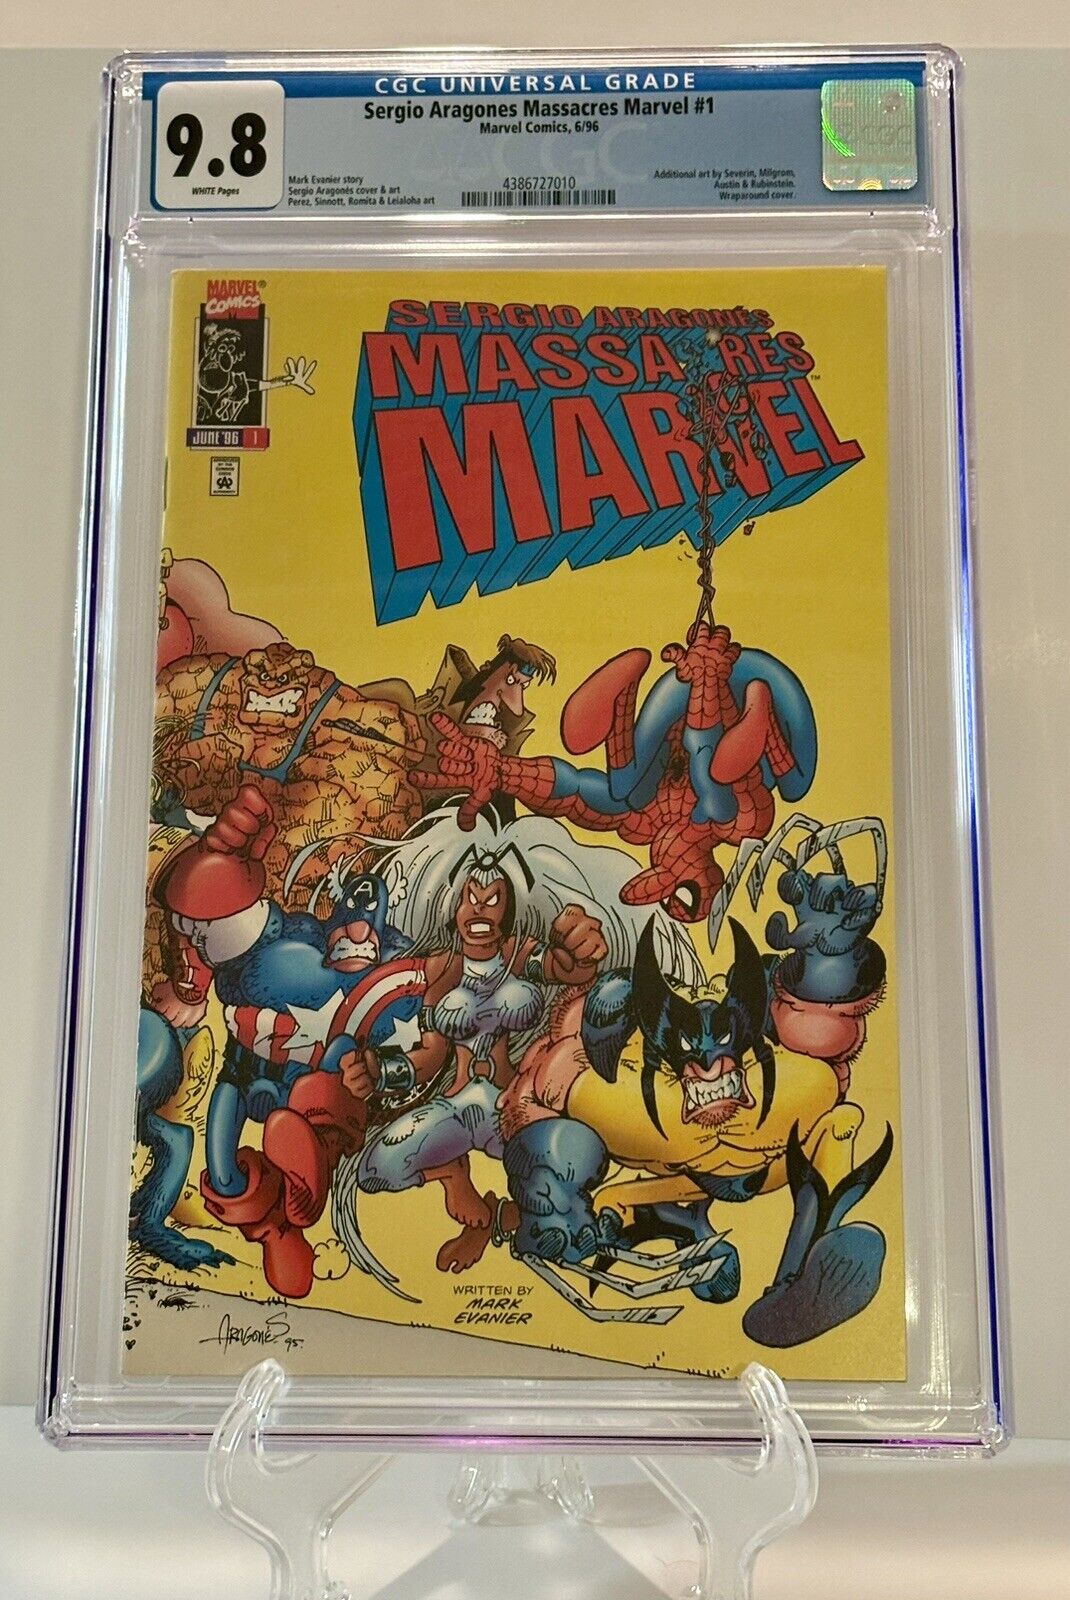 Sergio Aragones Massacres Marvel #1 (1996) 9.8 CGC White Pages Wrap Around Cover